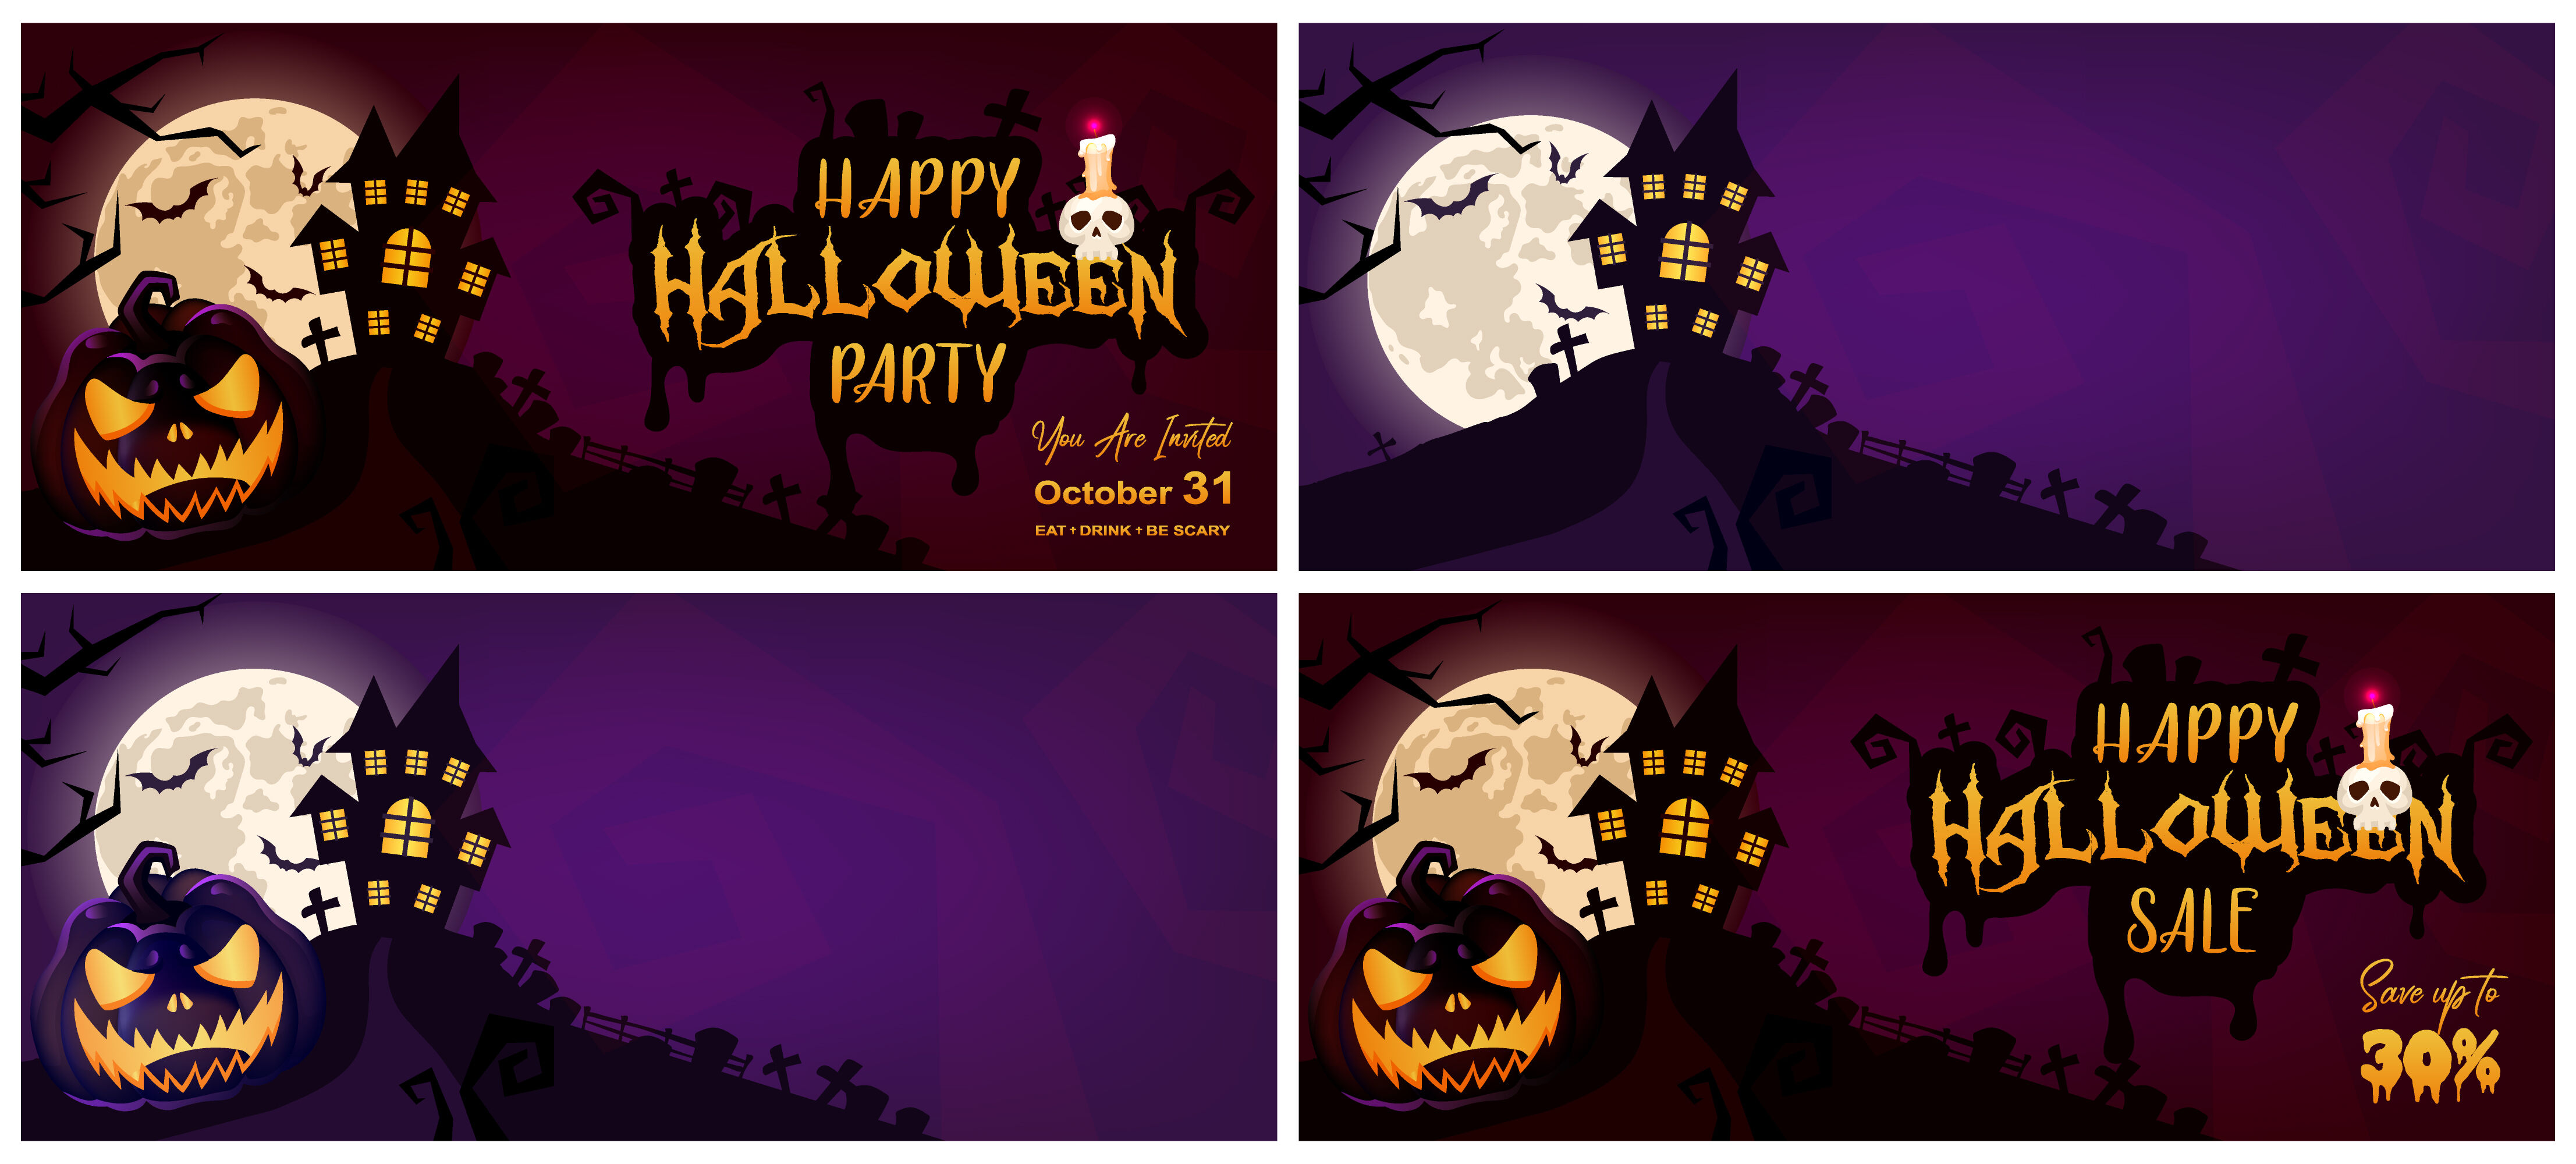 halloween banner templates